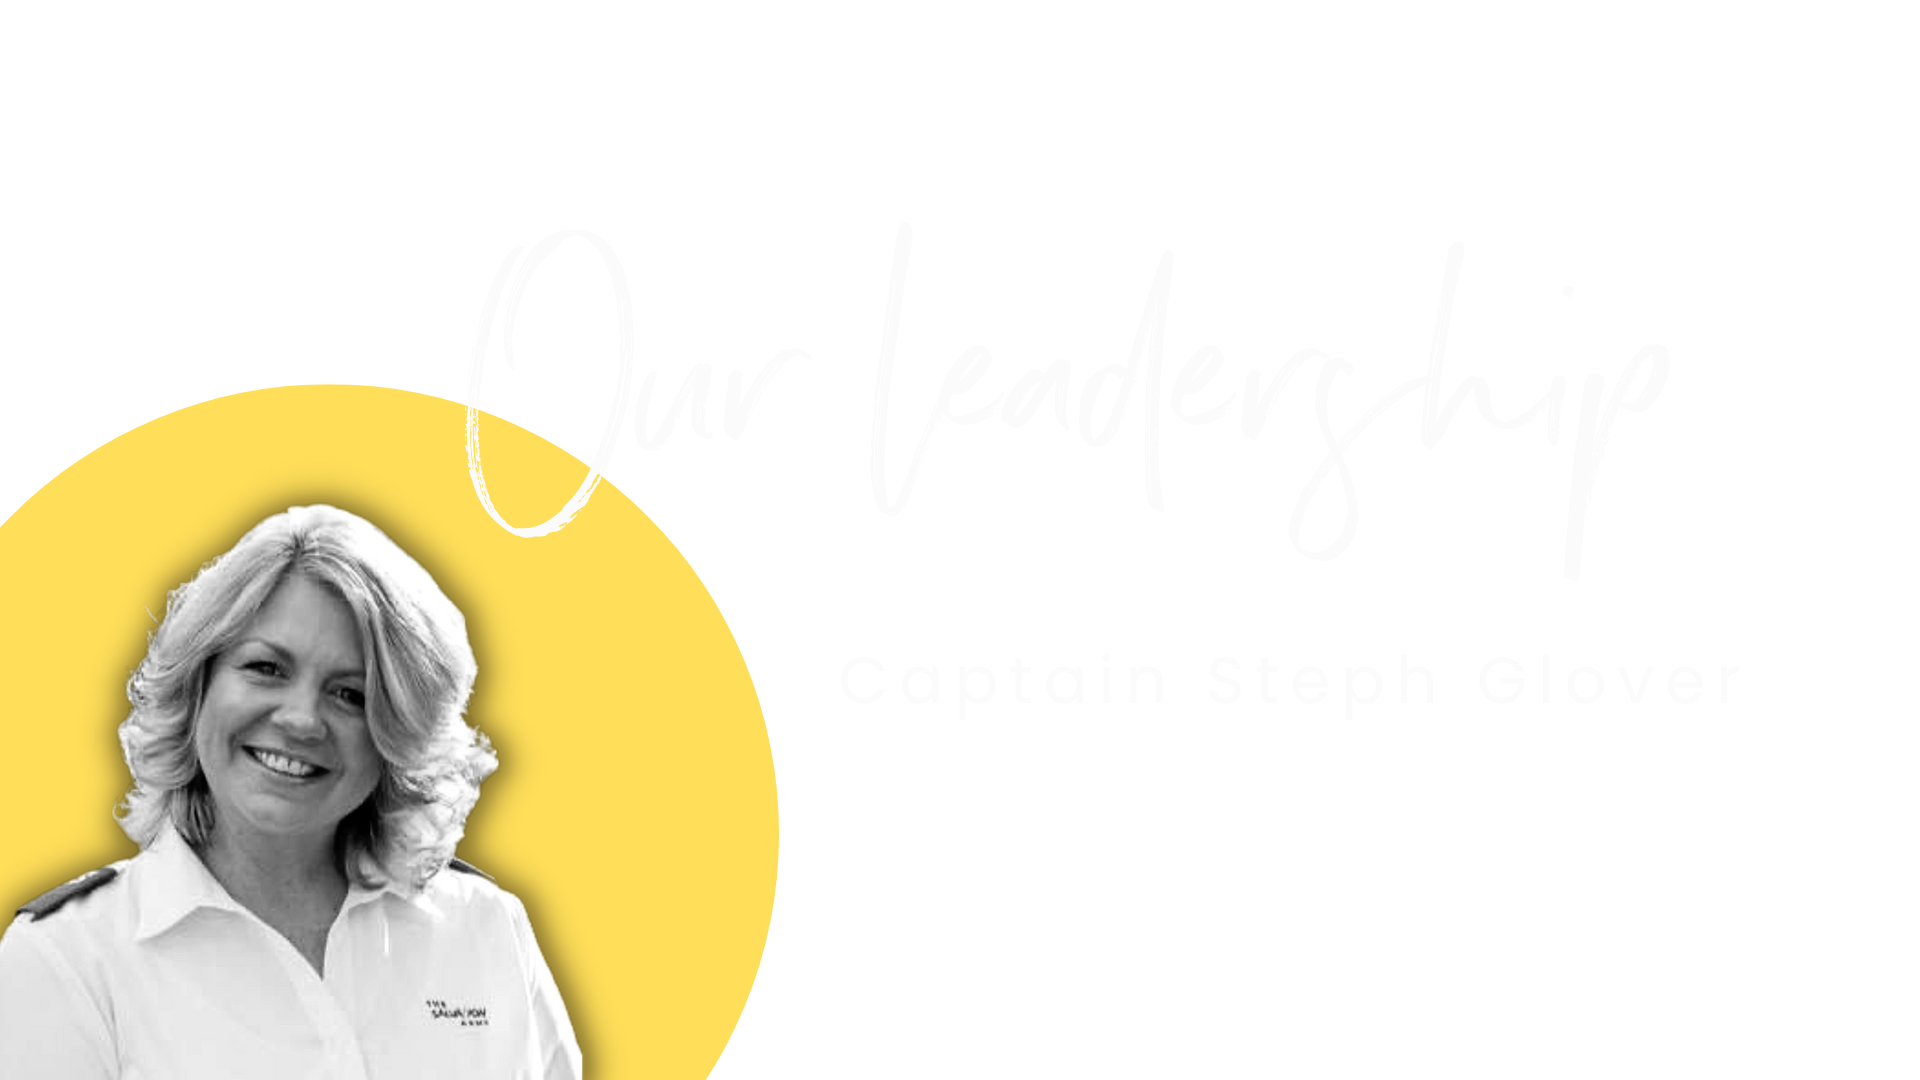 Captain Steph Glover